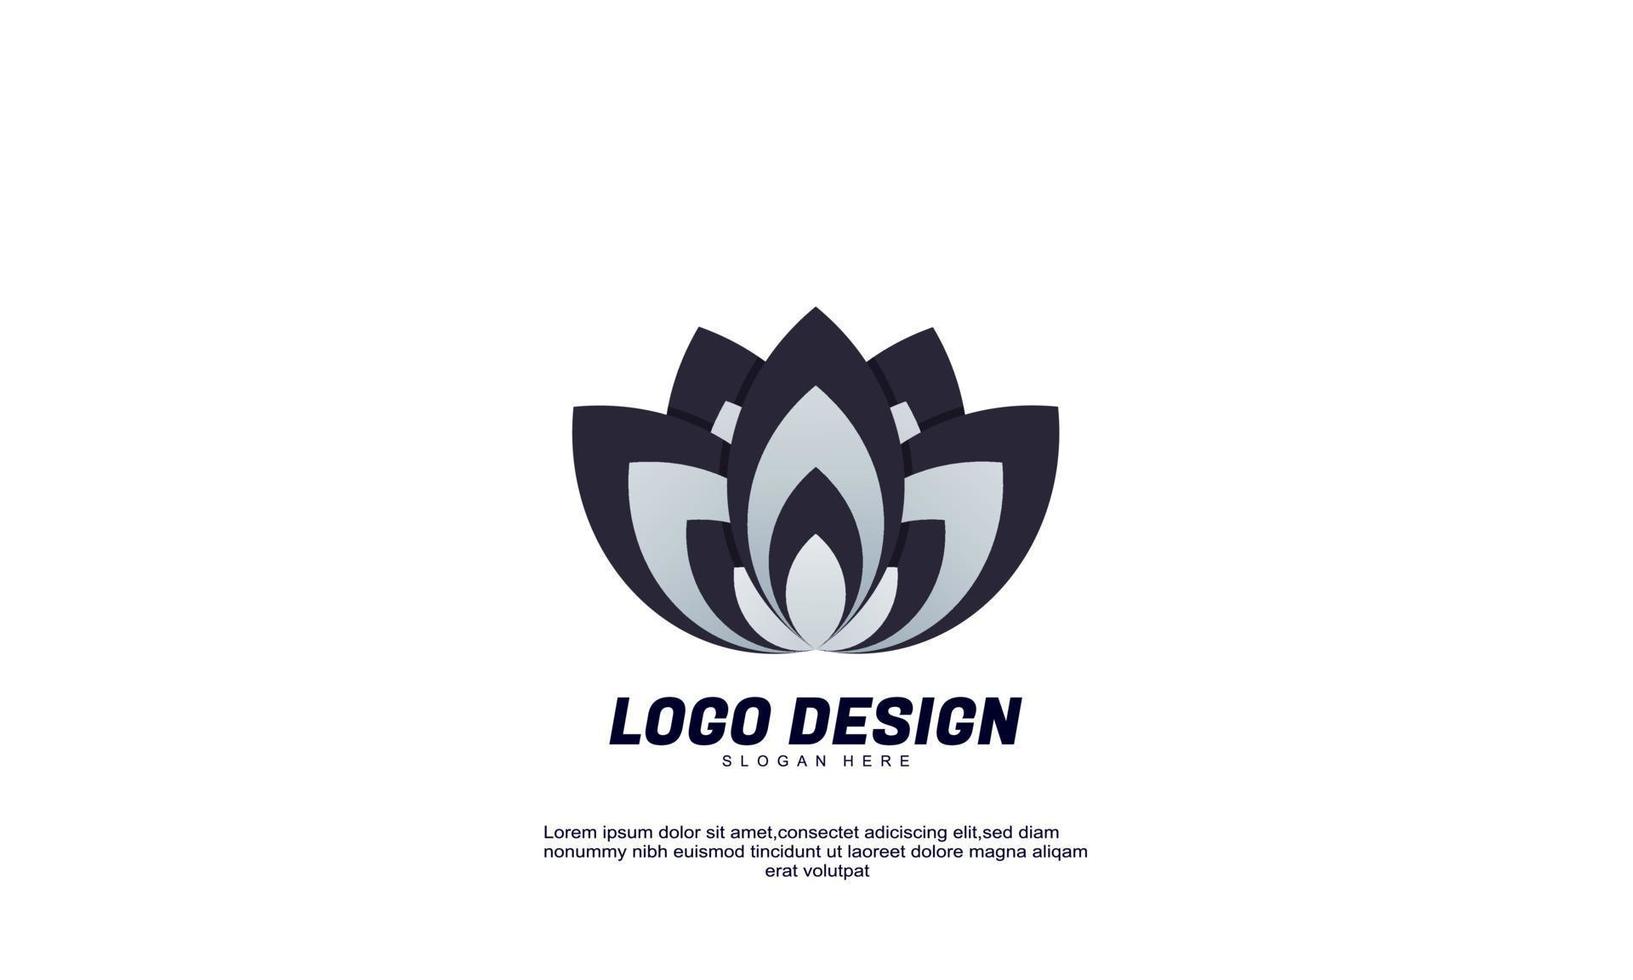 logotipo de flor de idea creativa abstracta de vector de stock para plantilla de diseño de color blanco negro de empresa o empresa